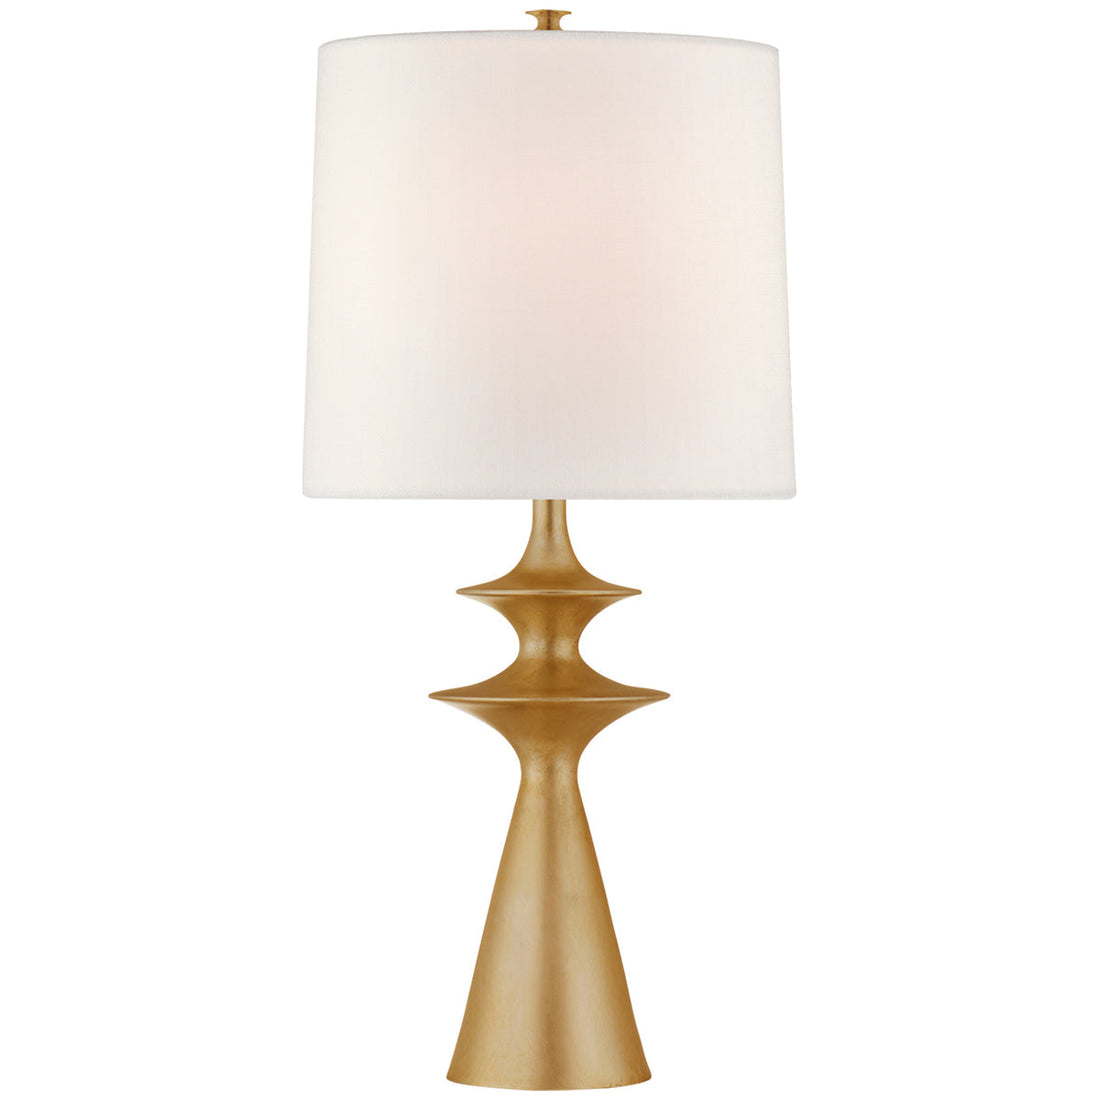 Visual Comfort Lakmos Large Table Lamp